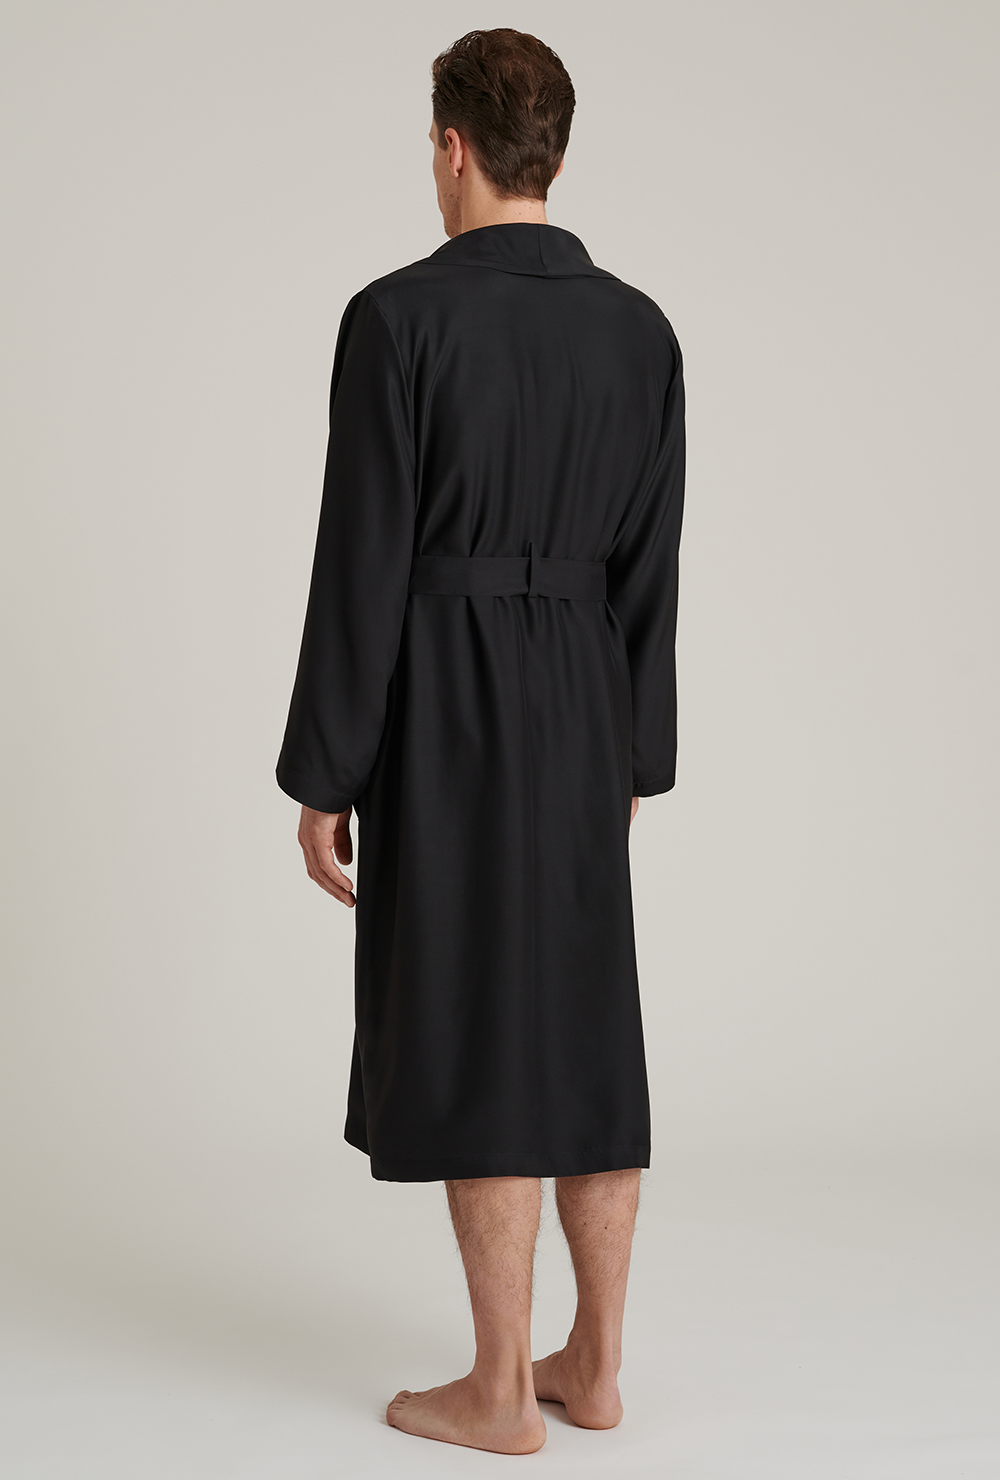 Black silk robe